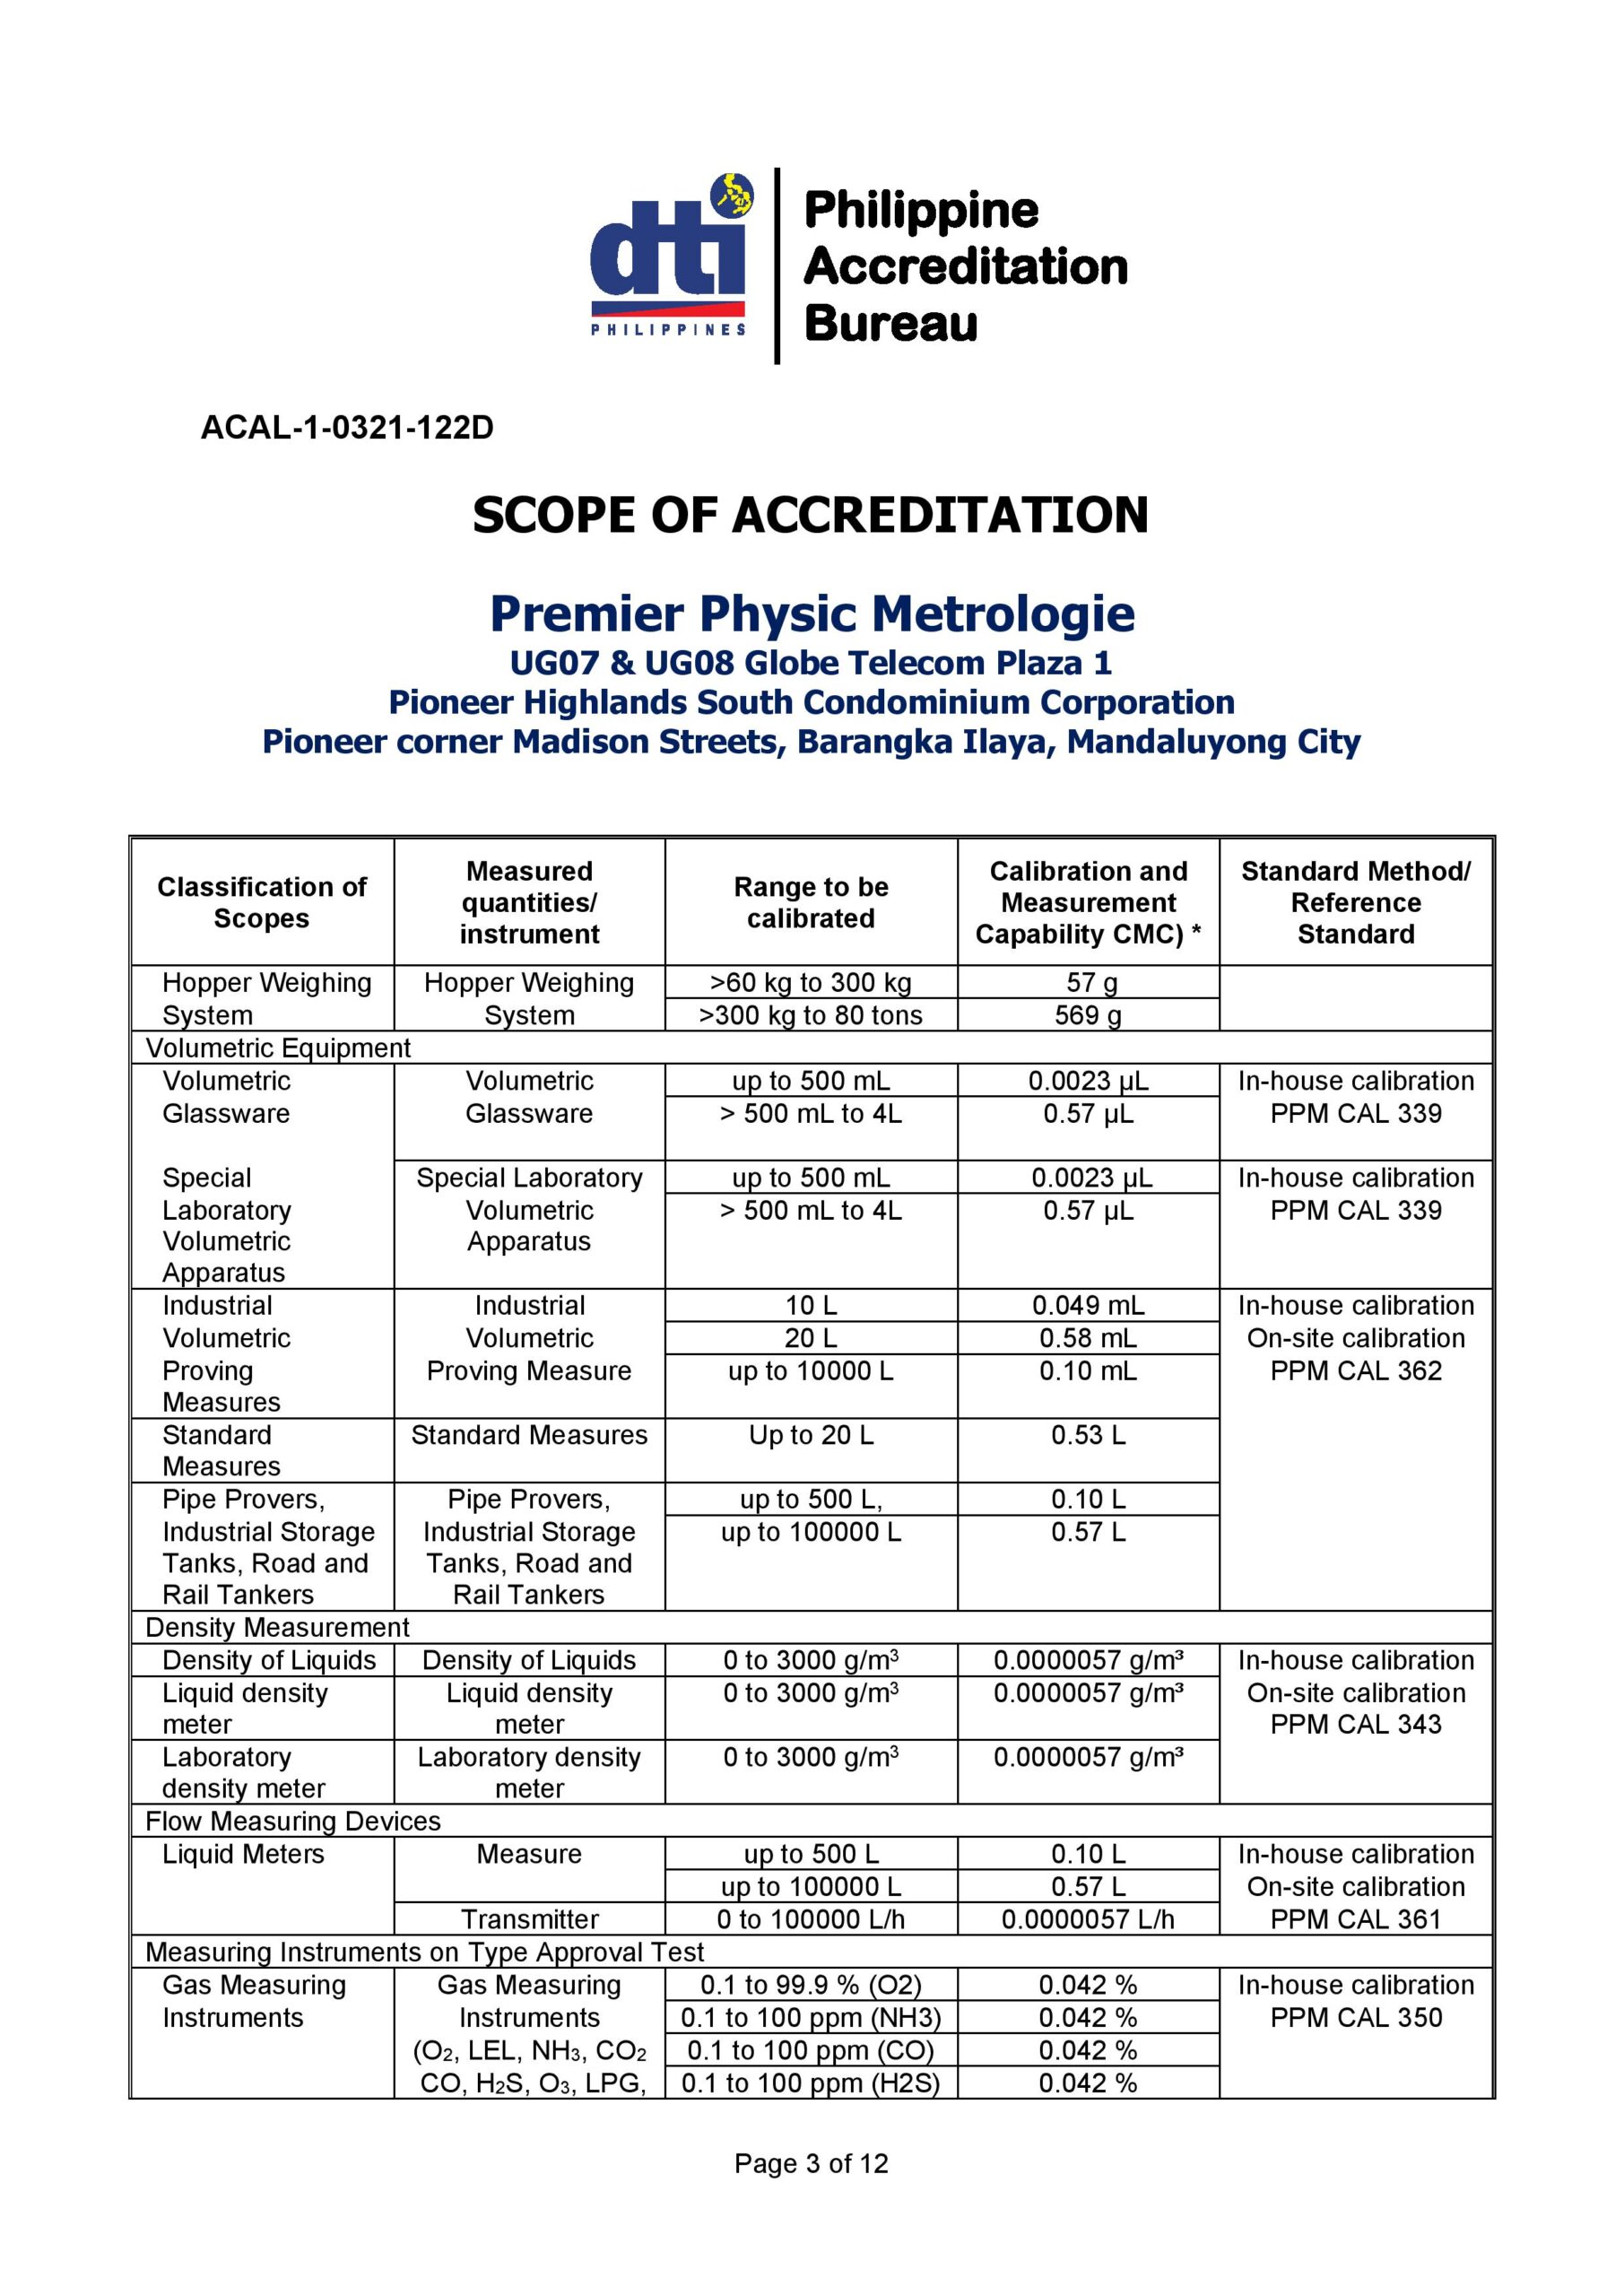 Premier Physic Metrologie - Scope of Accreditation 3